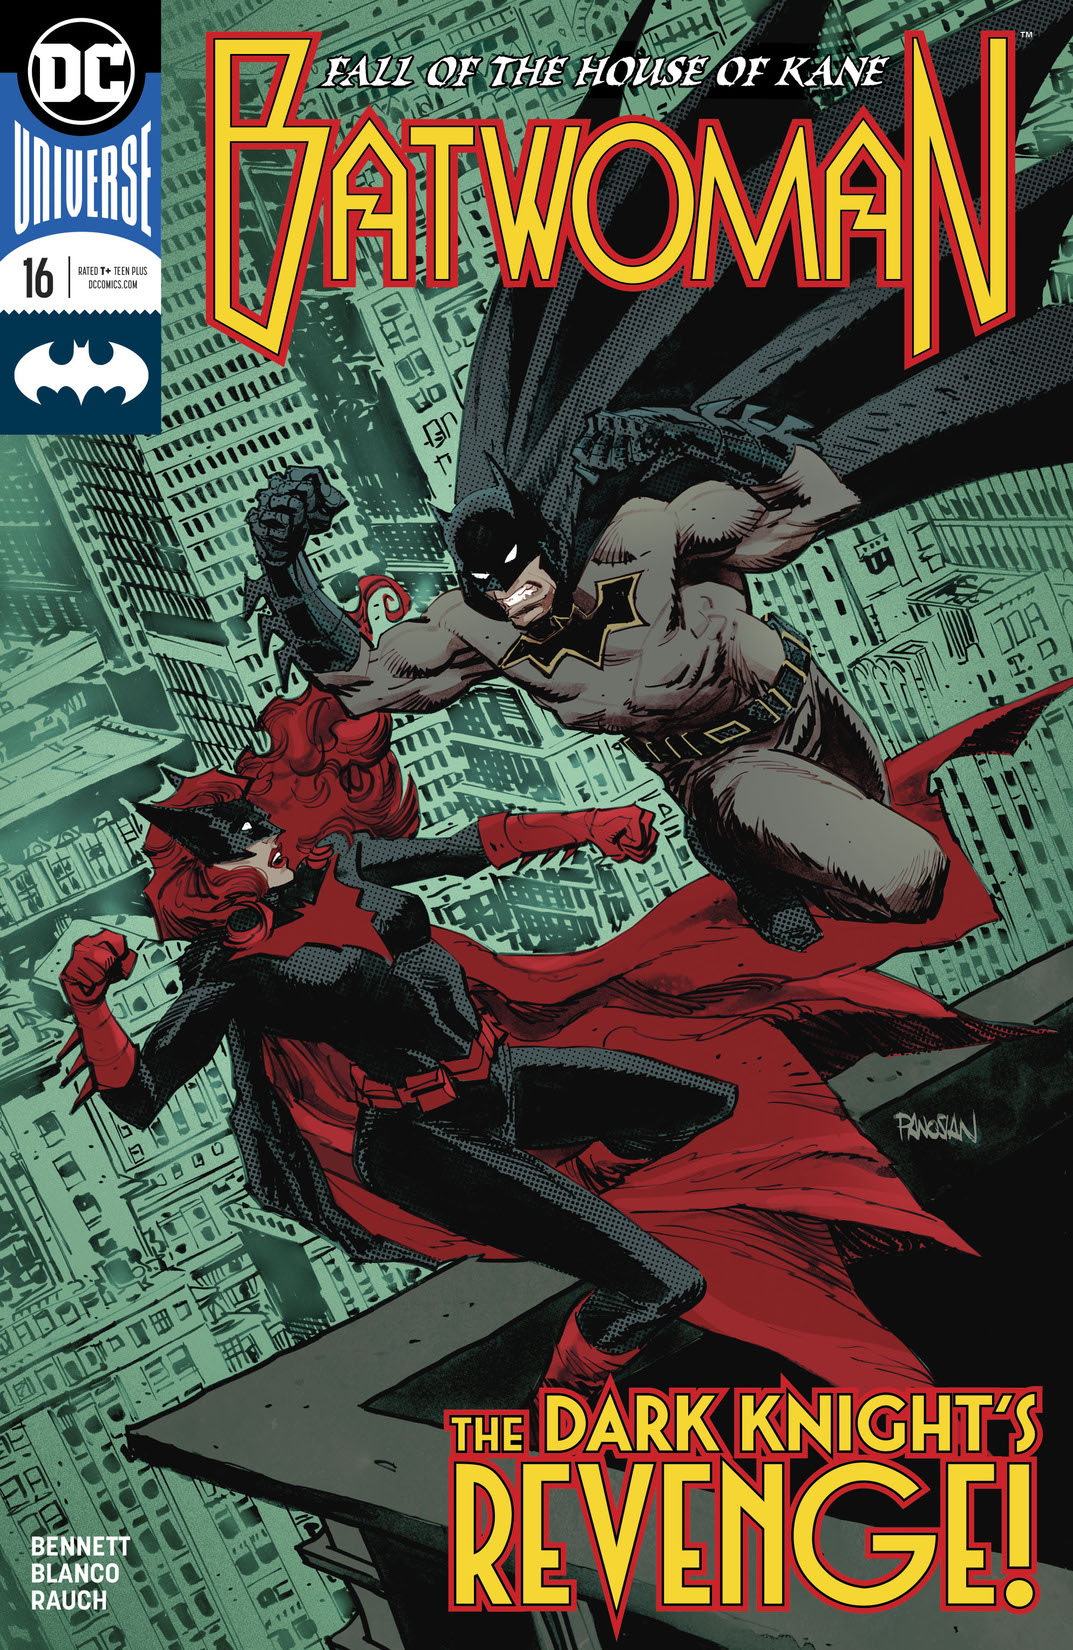 Batwoman (2017-) #16 preview images